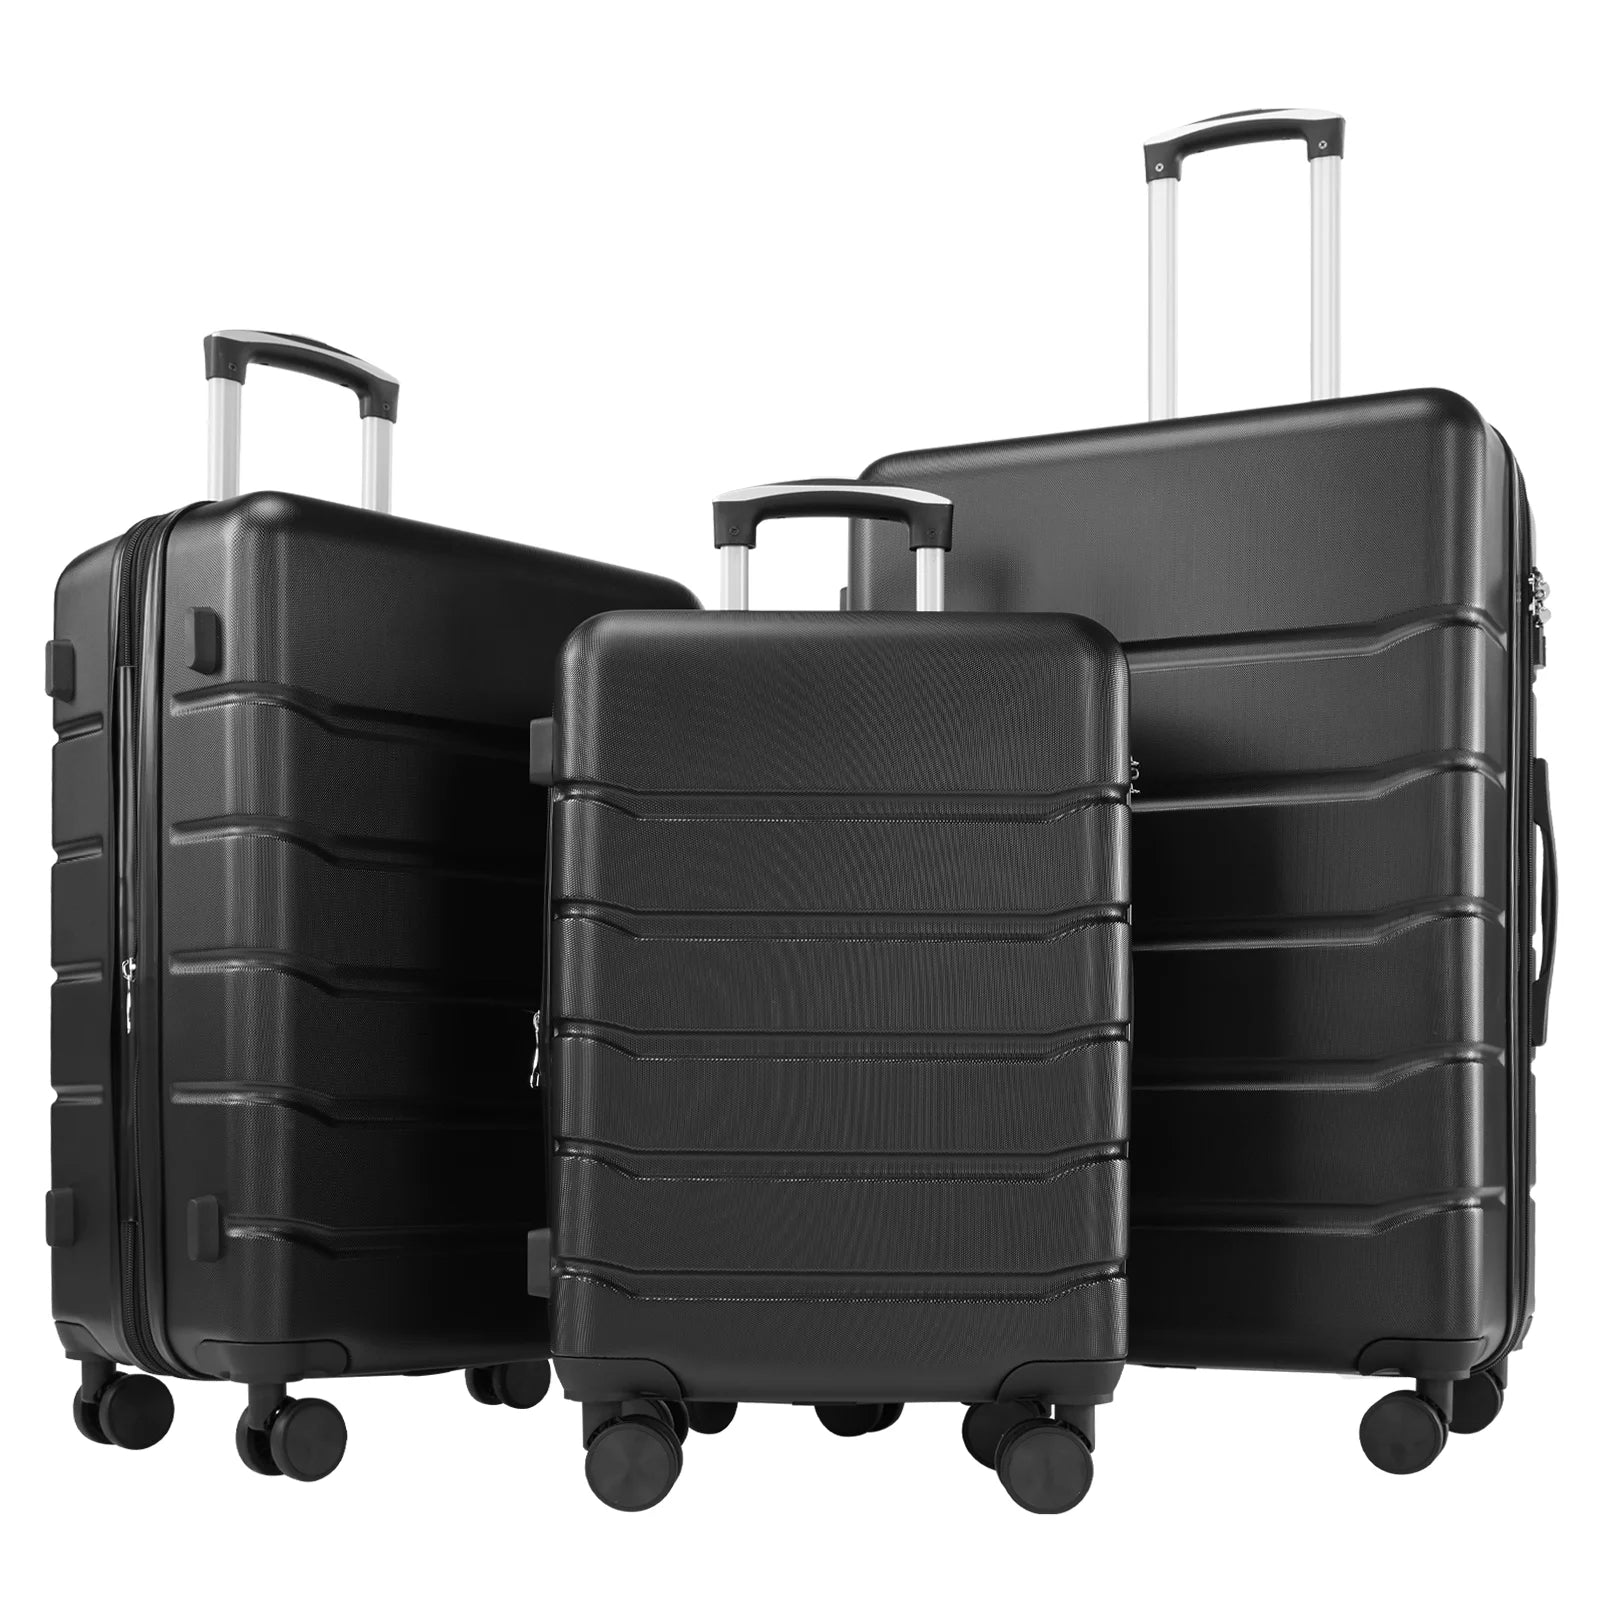 3 Piece Luggage Set With TSA Locks